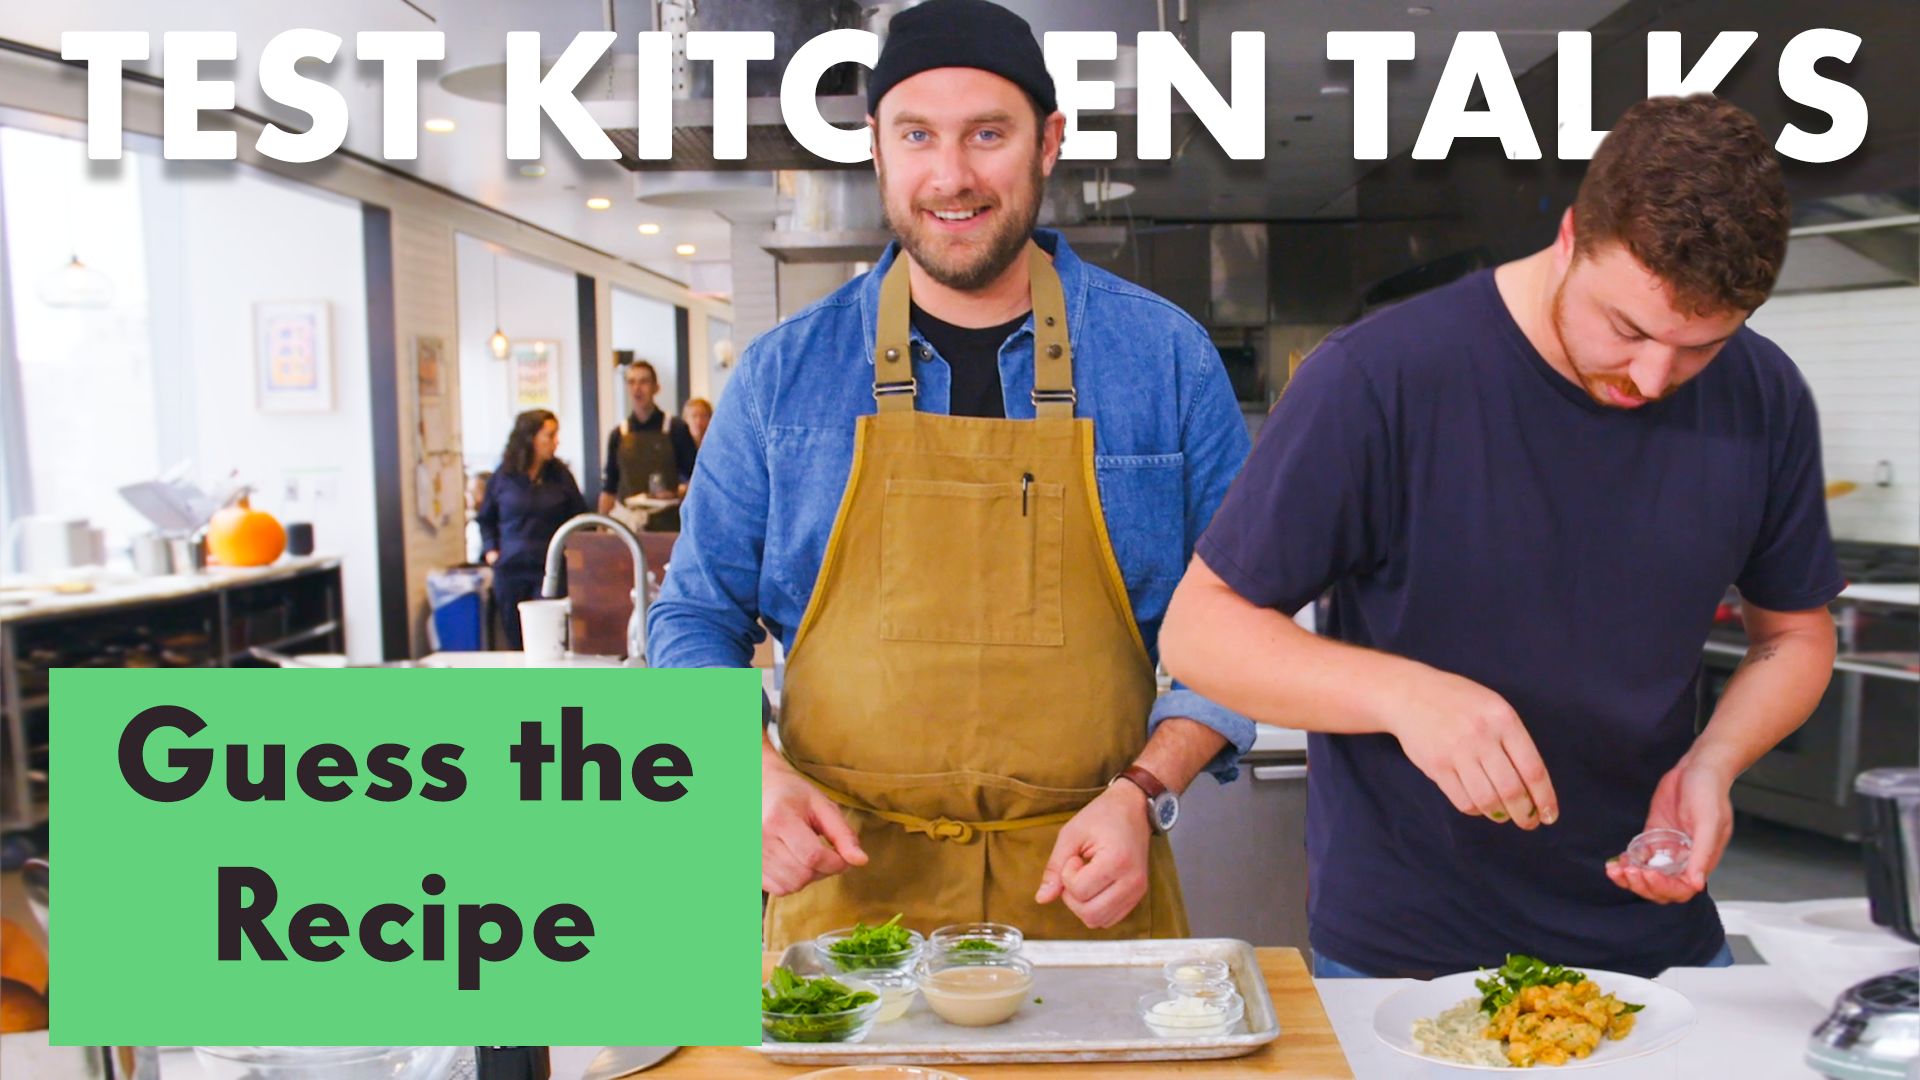 Watch Pro Chefs a Recipe Based on Ingredients Alone | Test Kitchen Talks | Bon Appétit